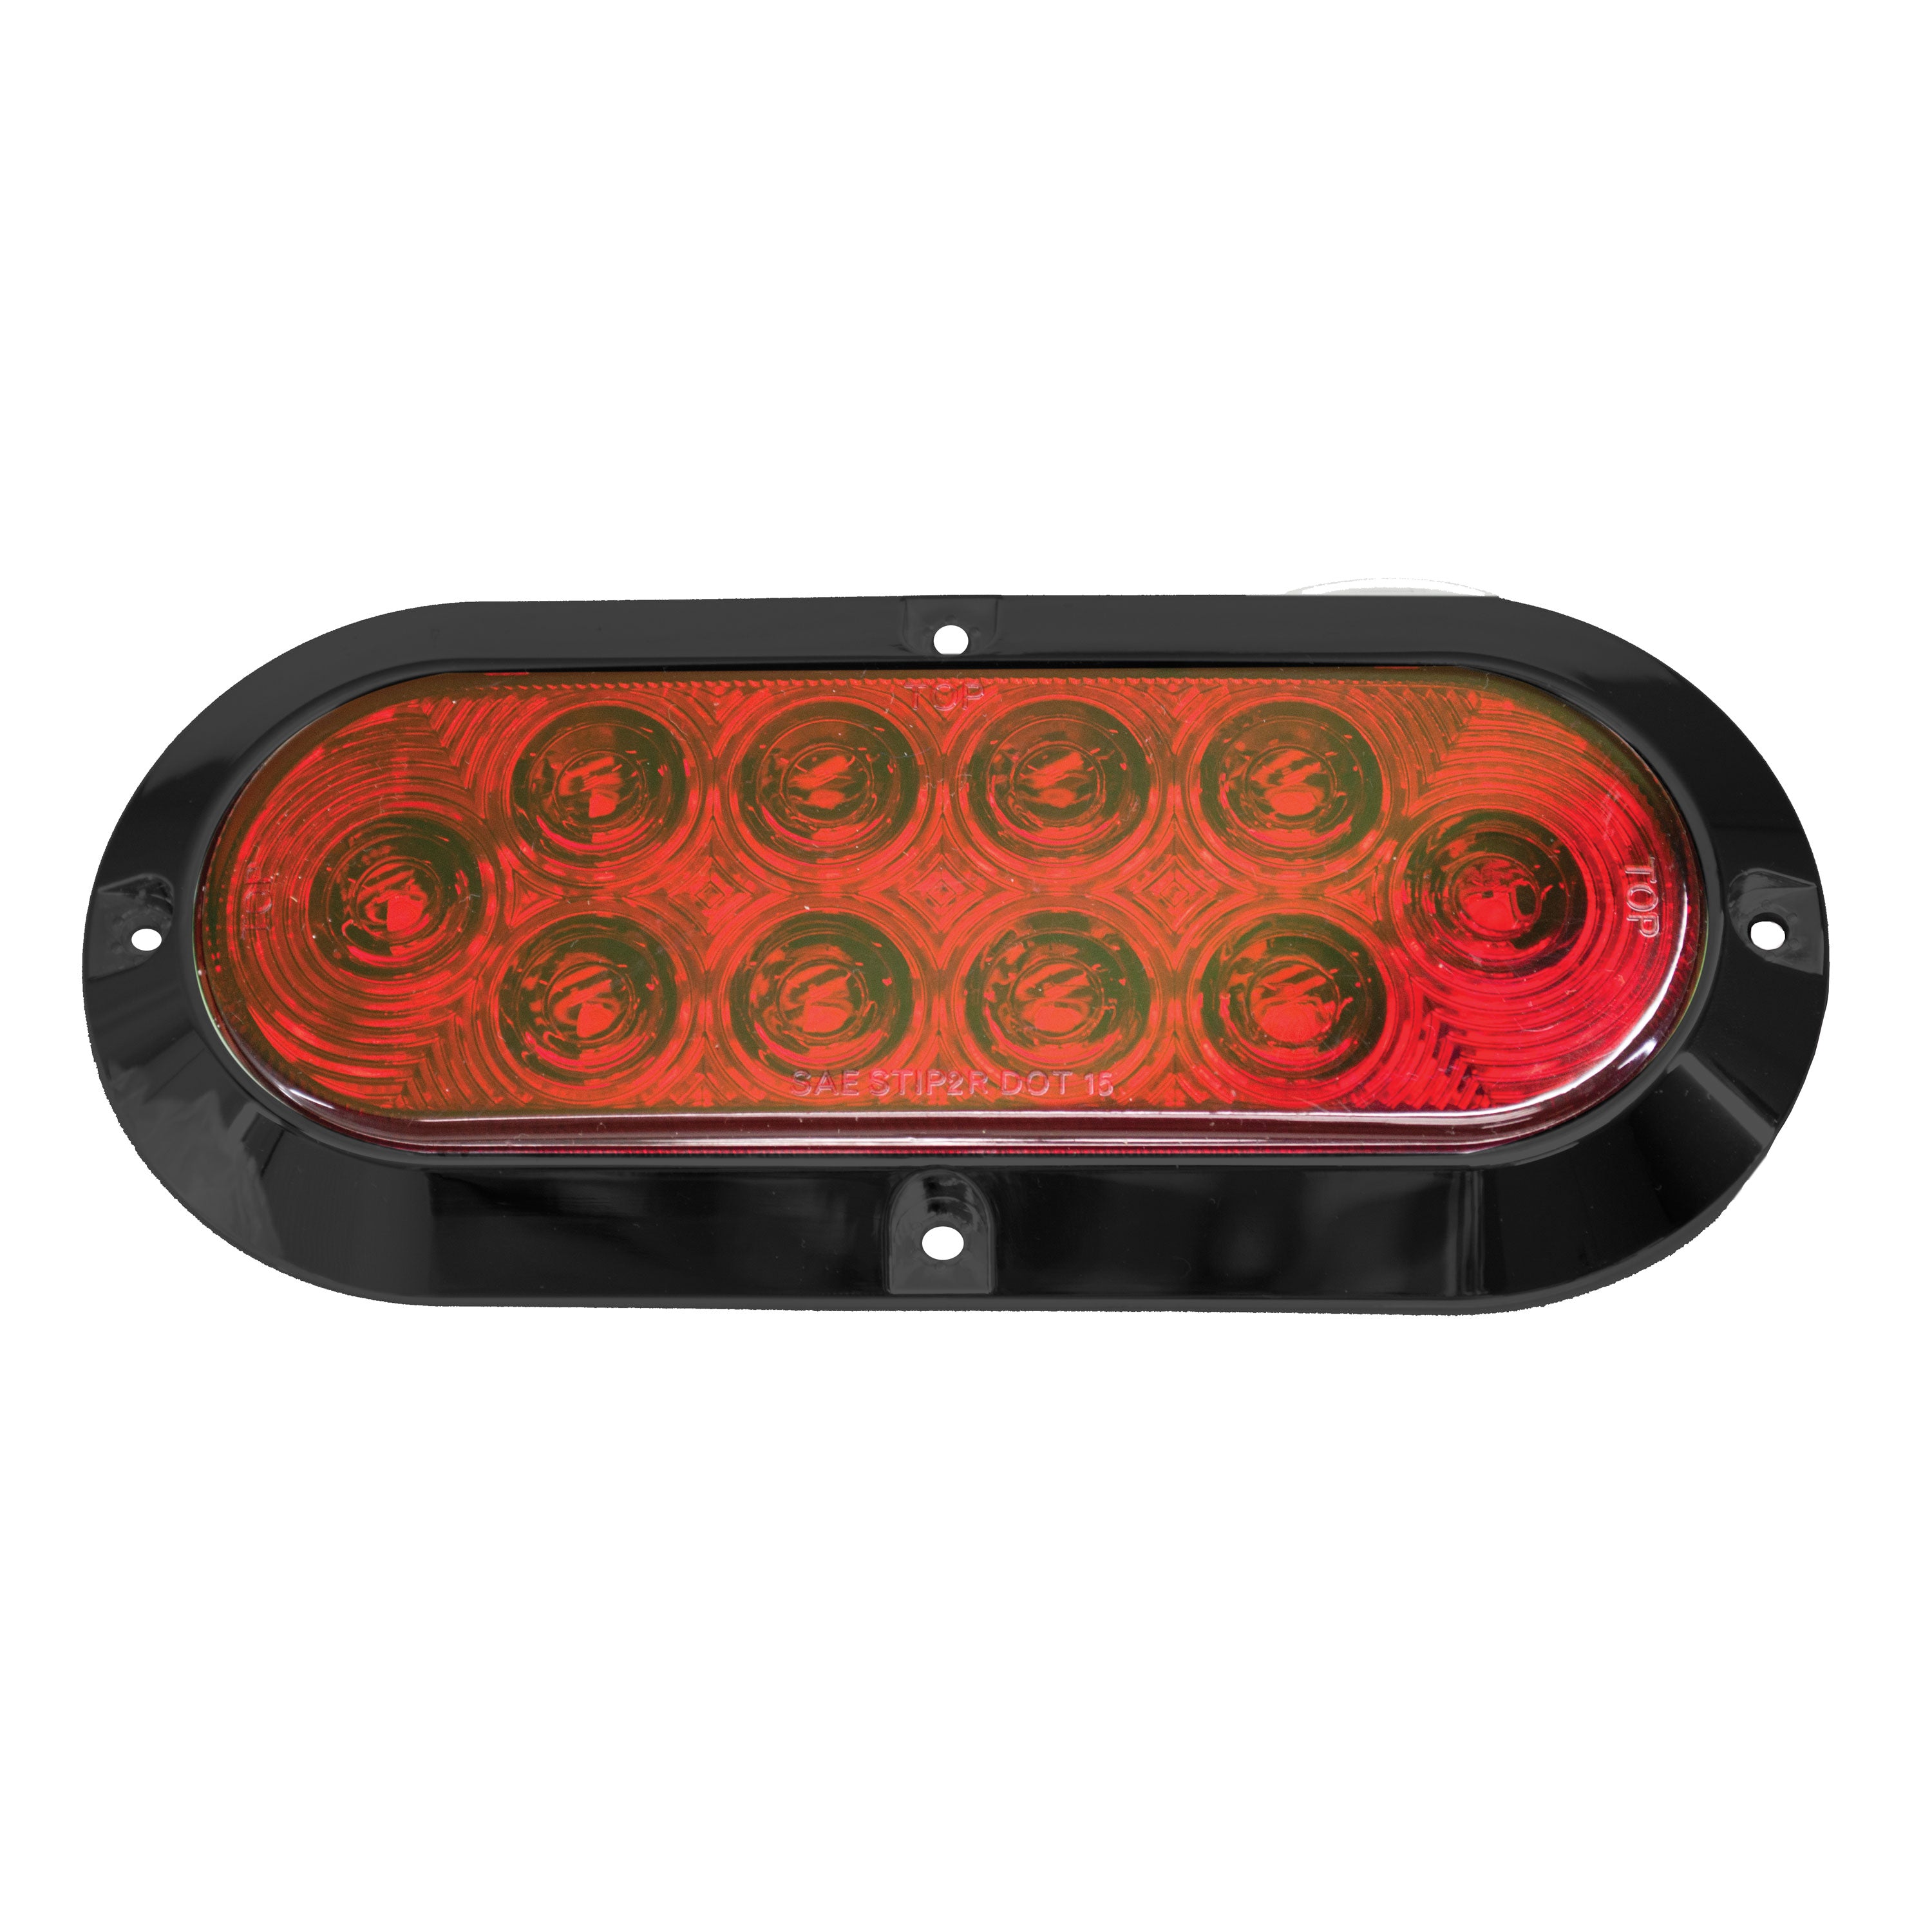 Innovative Lighting 161-4420-7 Oval 6" LED Stop/Turn/Tail Light Red - Chrome Trim